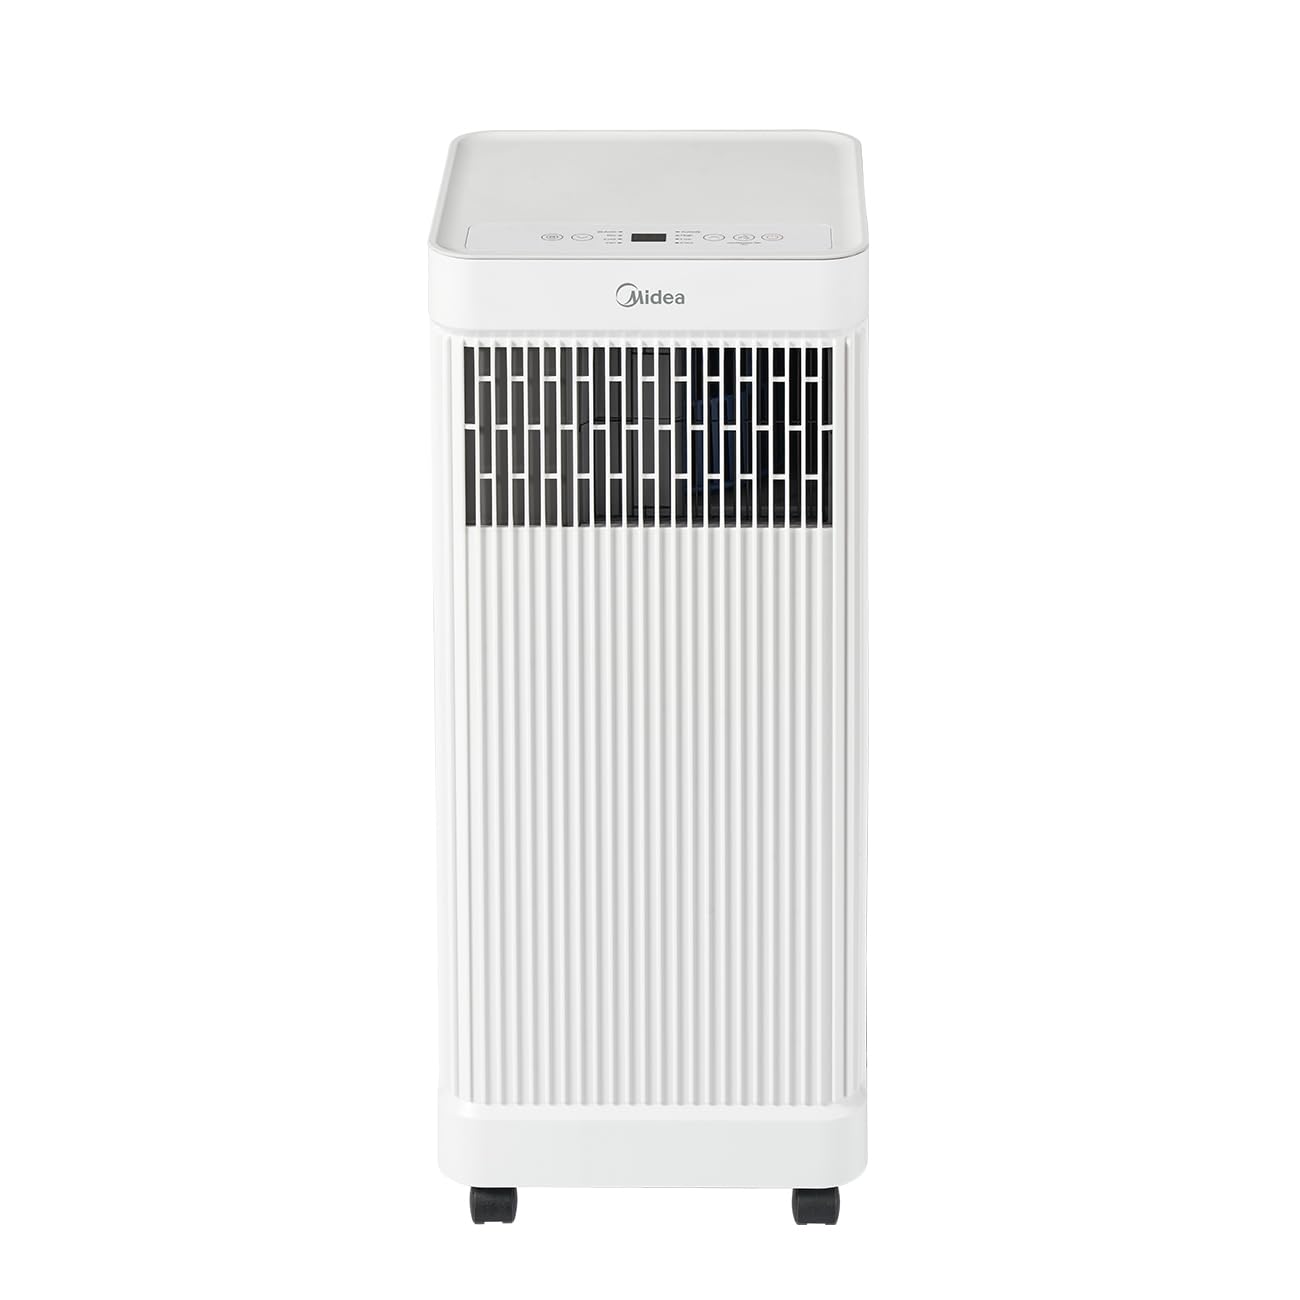 Midea 8,500 BTU ASHRAE (5,000 BTU SACC) Portable Air Conditioner Smart Control, Cools up to 150 Sq. Ft. $219.99